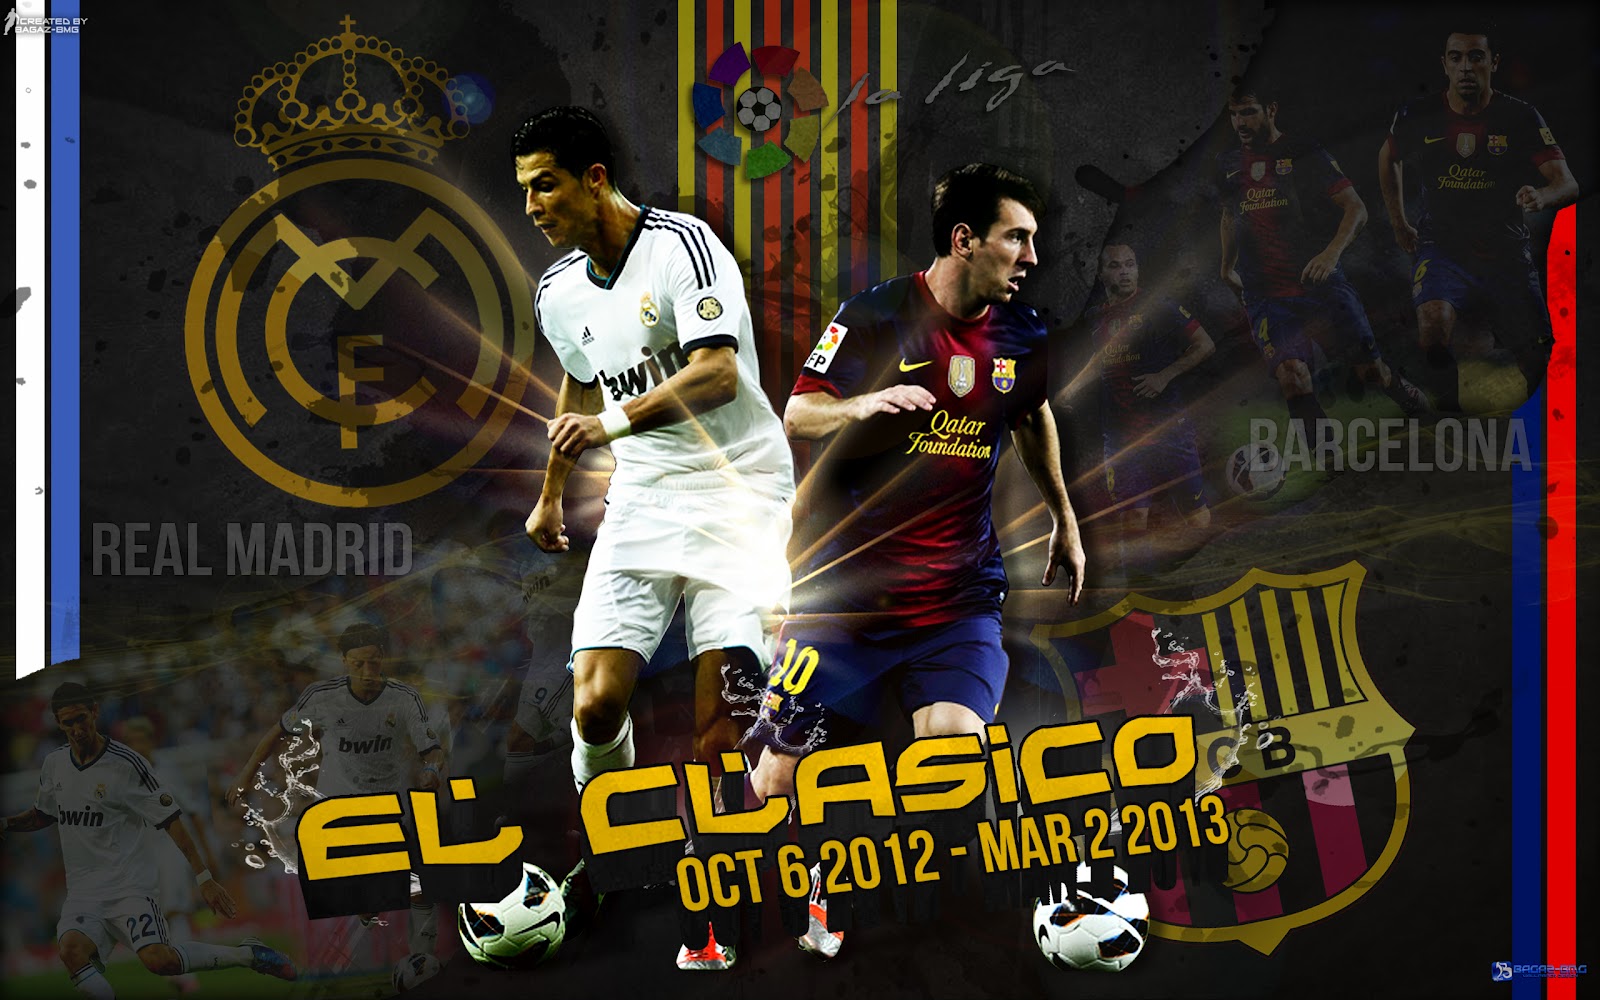 https://blogger.googleusercontent.com/img/b/R29vZ2xl/AVvXsEgT5CruUEVqNo9J0rtats2n7I9yY6oh1ic2meKo6jp8mycRzSq30aEoTR1C1tQSEOdQdN3JOuCGq6BOnGOZS6aXoiyhqyZt1D2B_R5fRXZLdPbsNnGJVrsba3tW8P_r1Wl4xw6zBg8m2MD5/s1600/EL+Clasico+FC+Barcelona+vs+Real+Madrid+2013+Wallpaper+HD+Lionel+Messi+and+Cristiano+Ronaldo.jpg